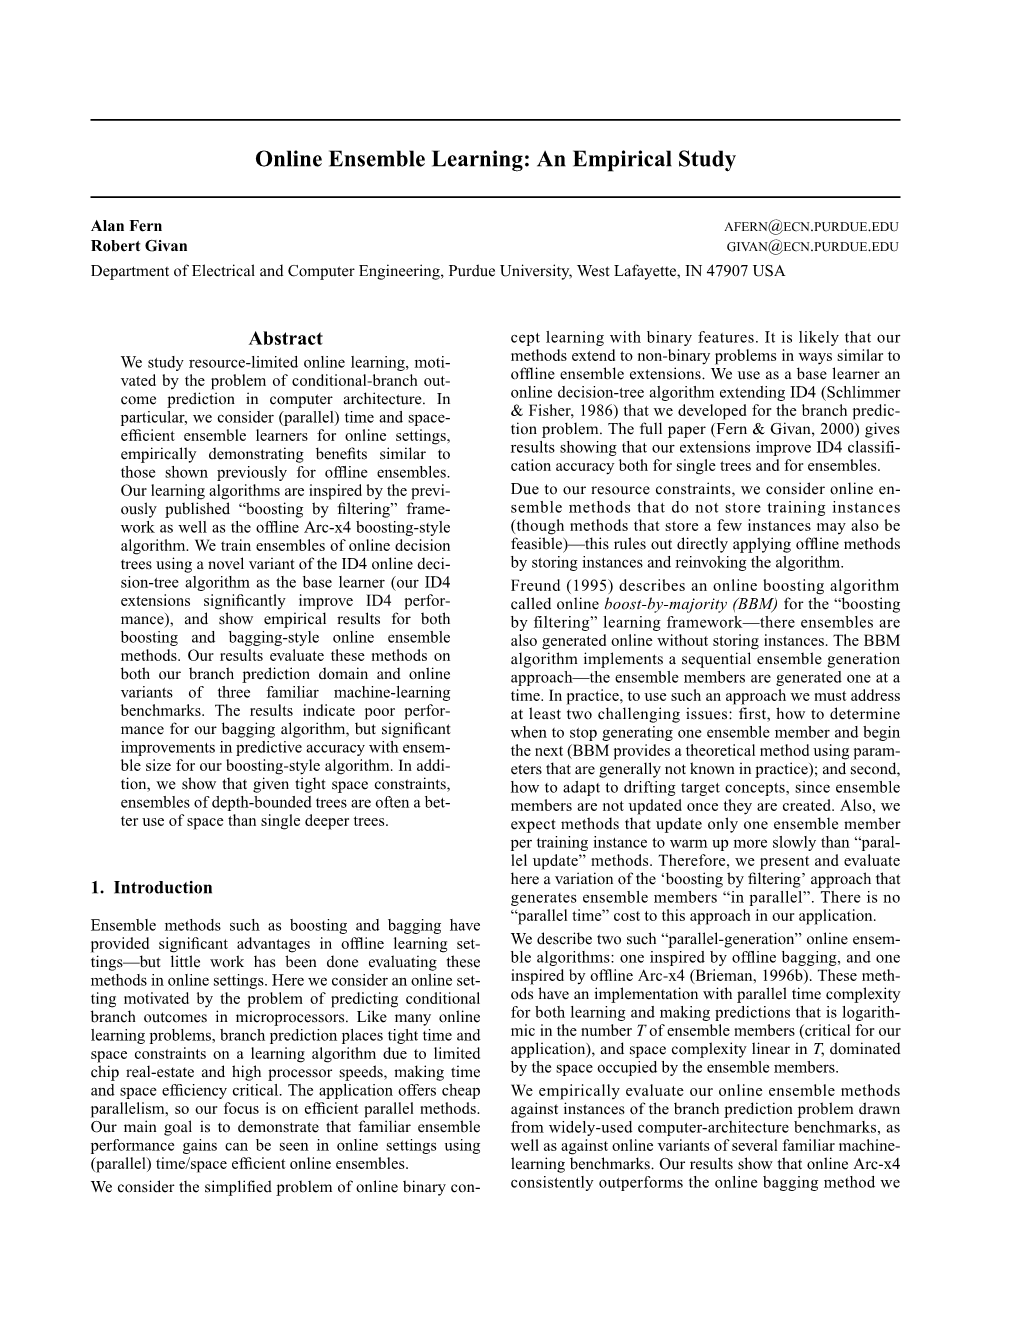 Online Ensemble Learning: an Empirical Study